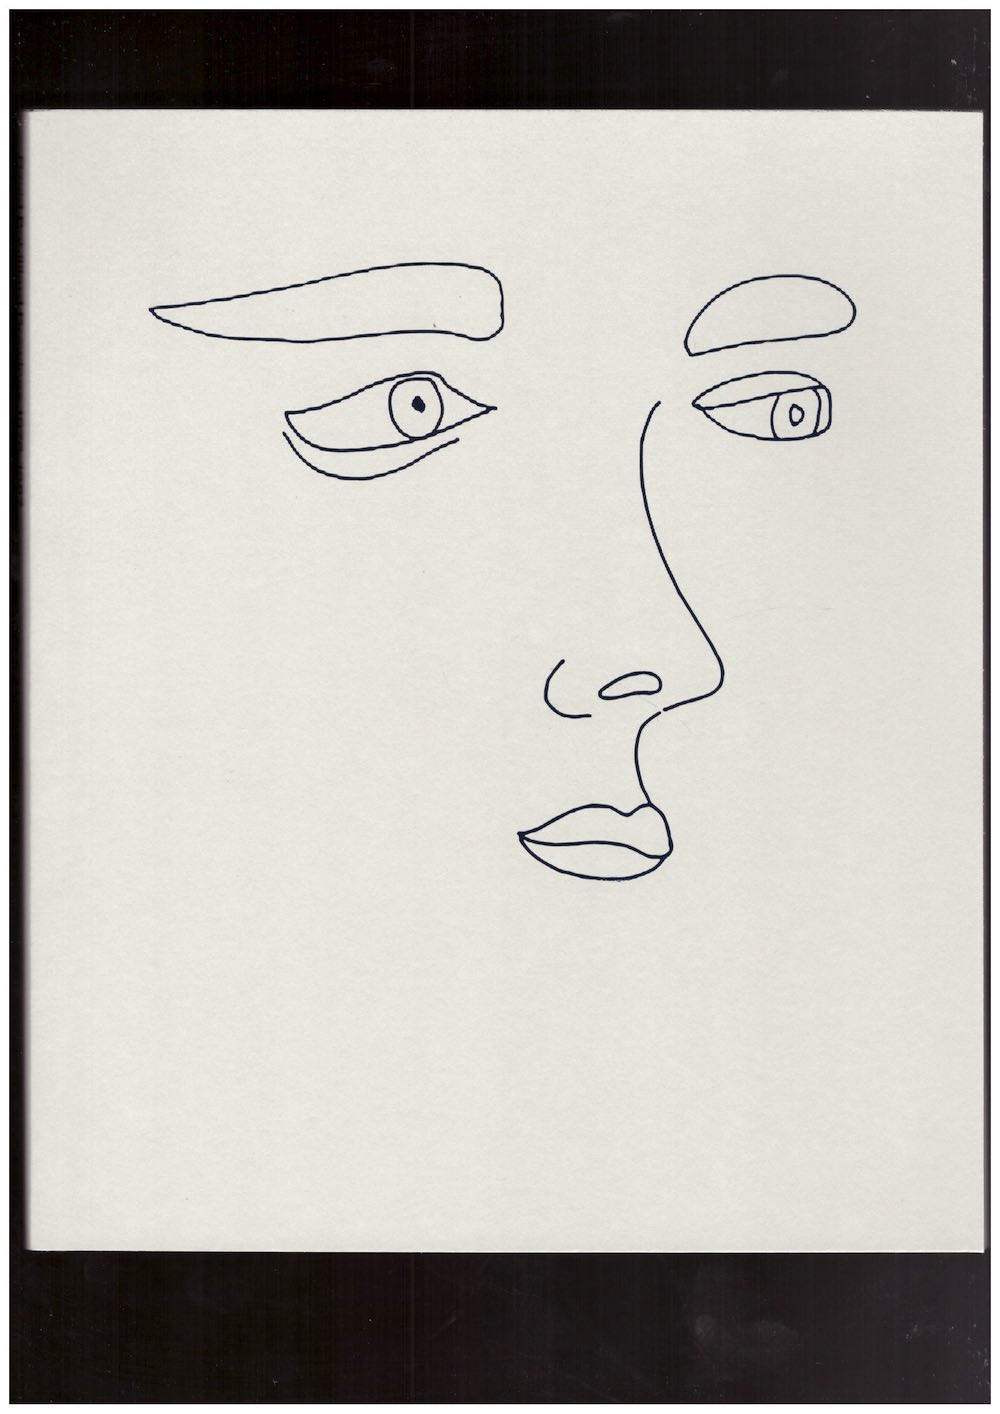 ROBILLIARD, David - David Robilliard Drawings 1976-1987